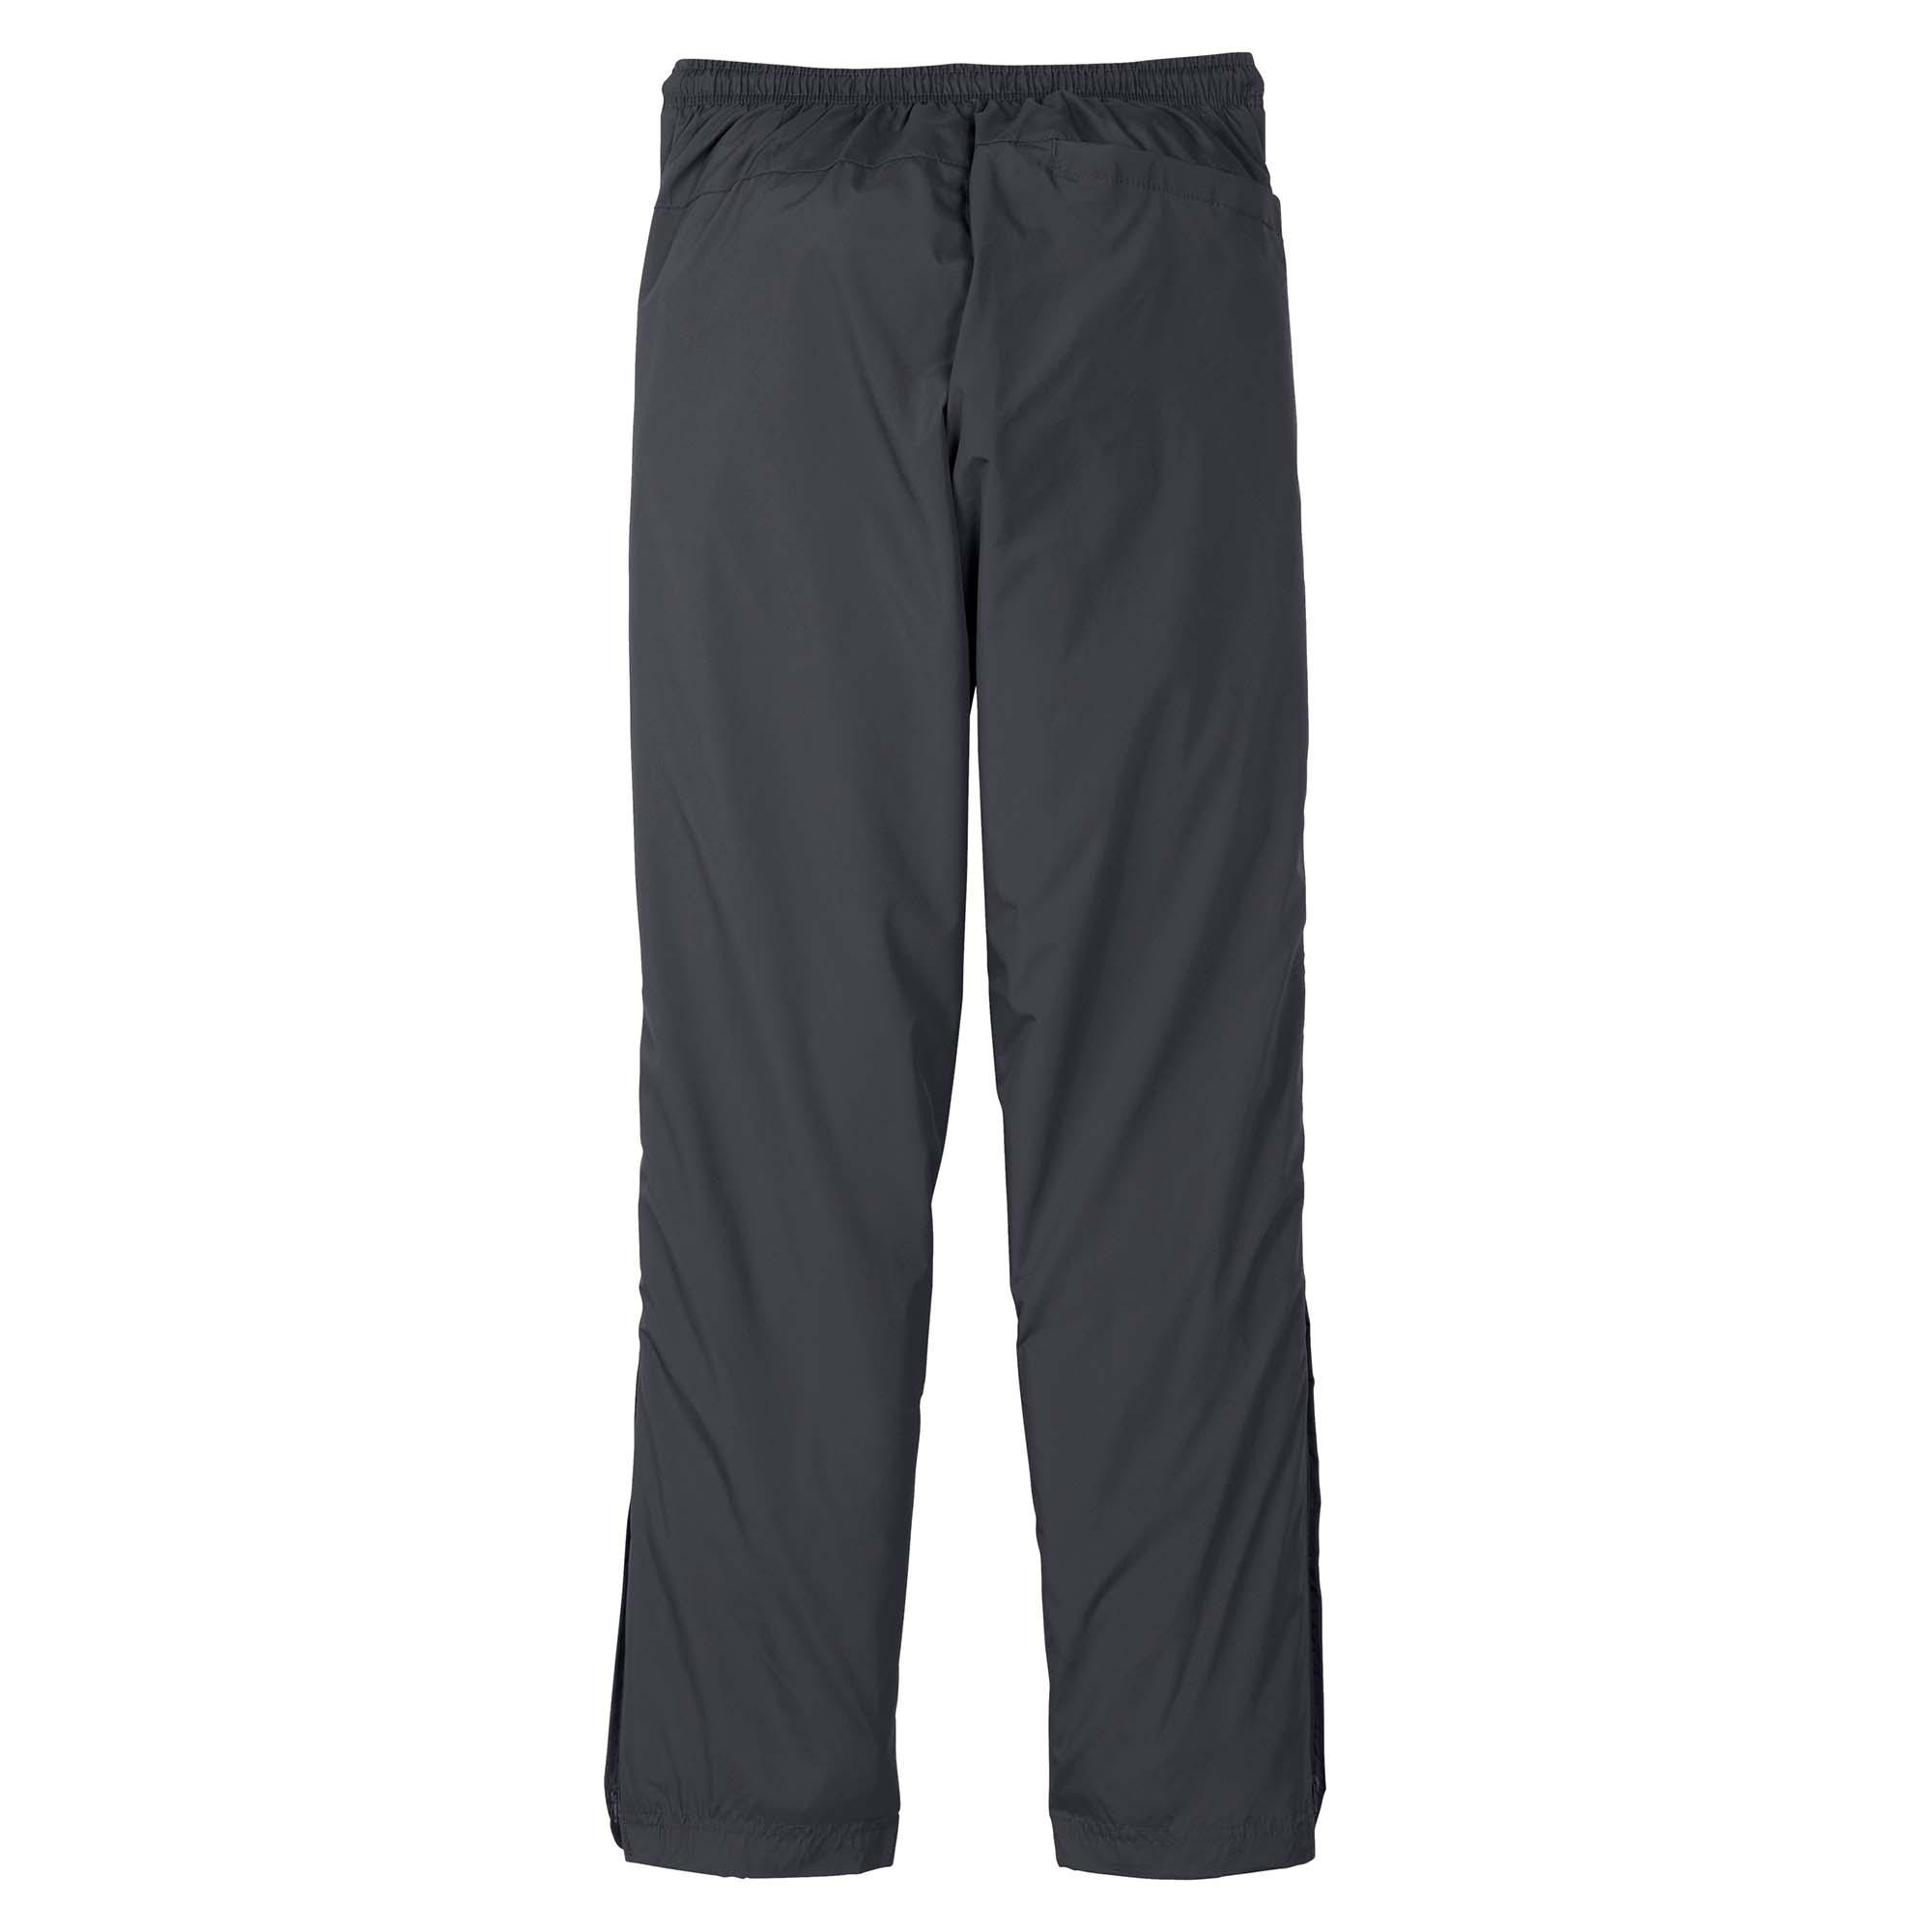 Sport-Tek PST74 Wind Pants - Graphite Grey | Full Source